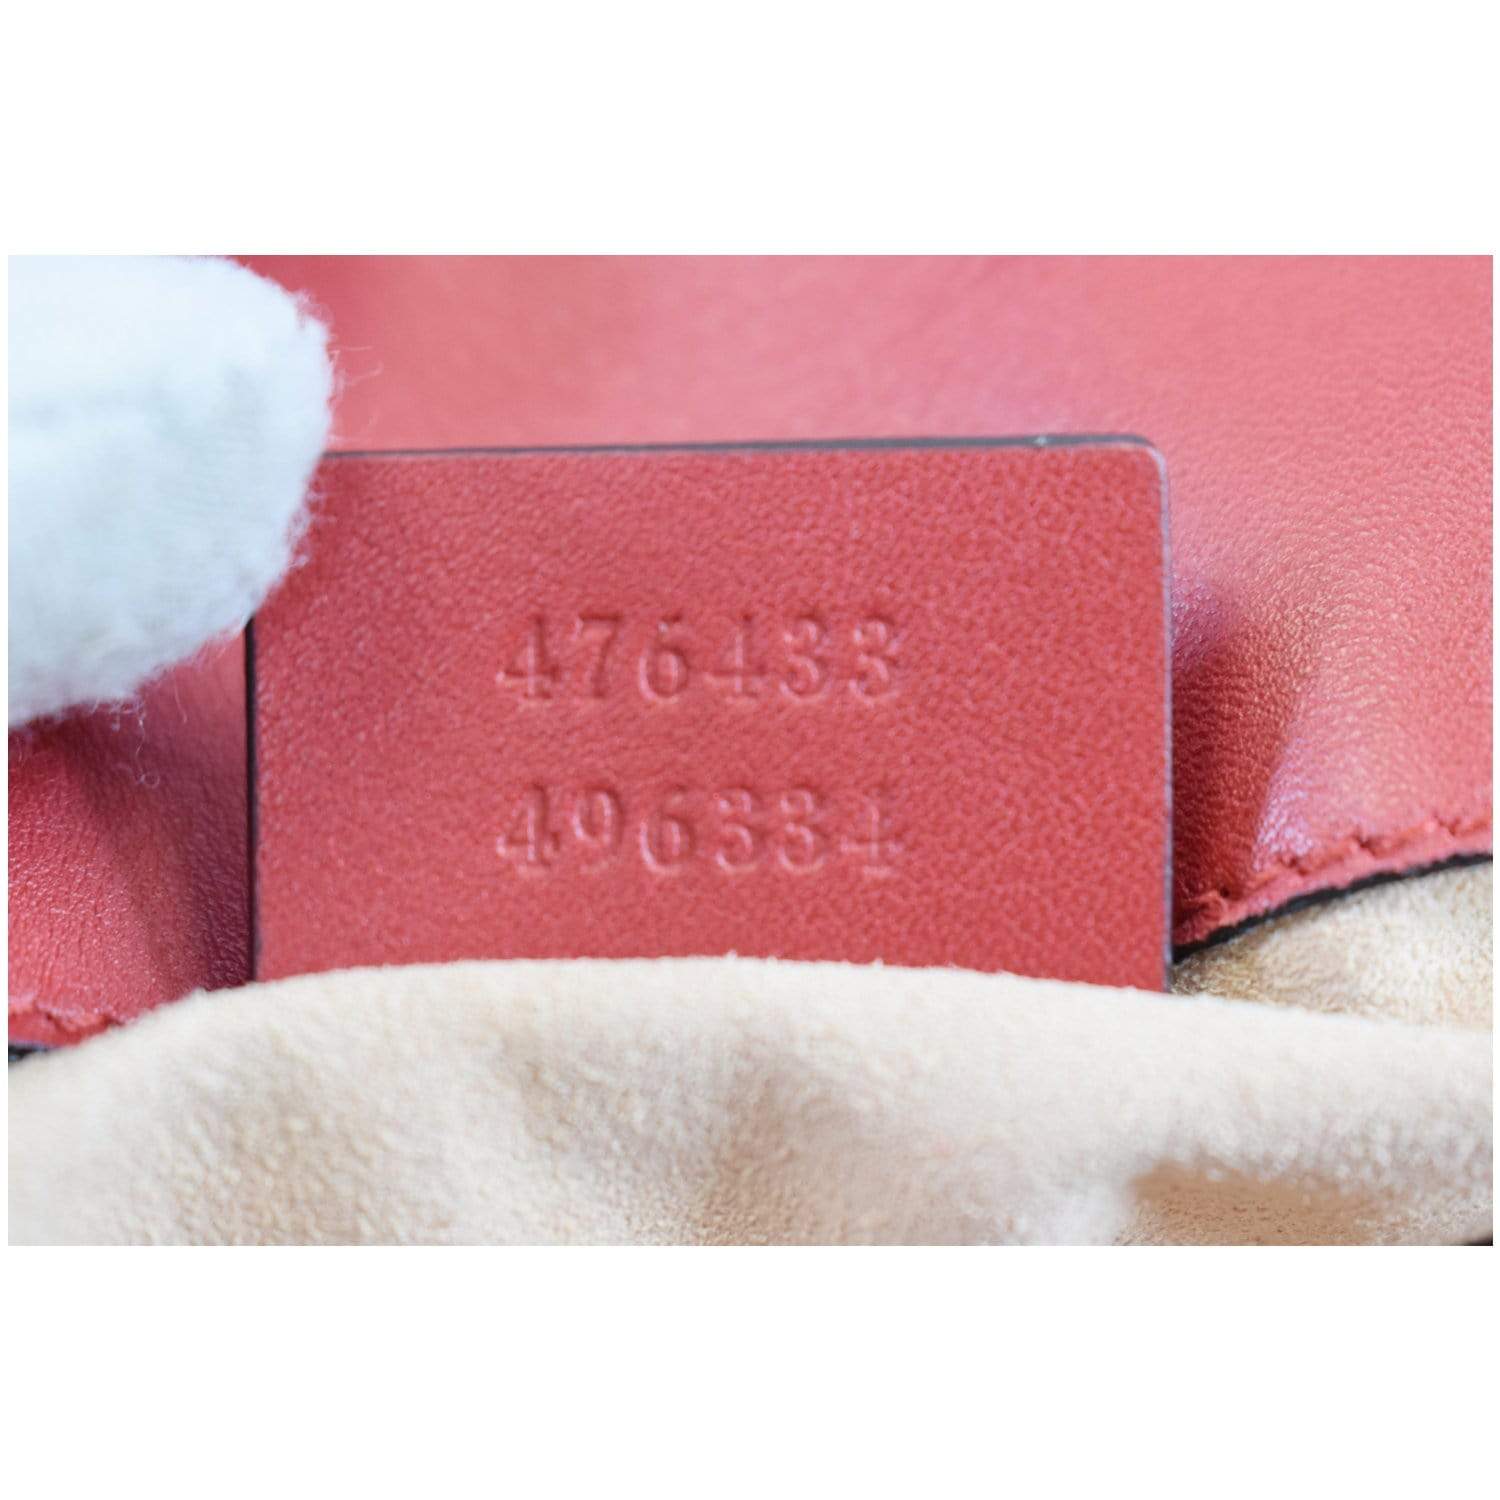 Gucci Gg Marmont Mini Matelassé Leather Crossbody Bag in Pink